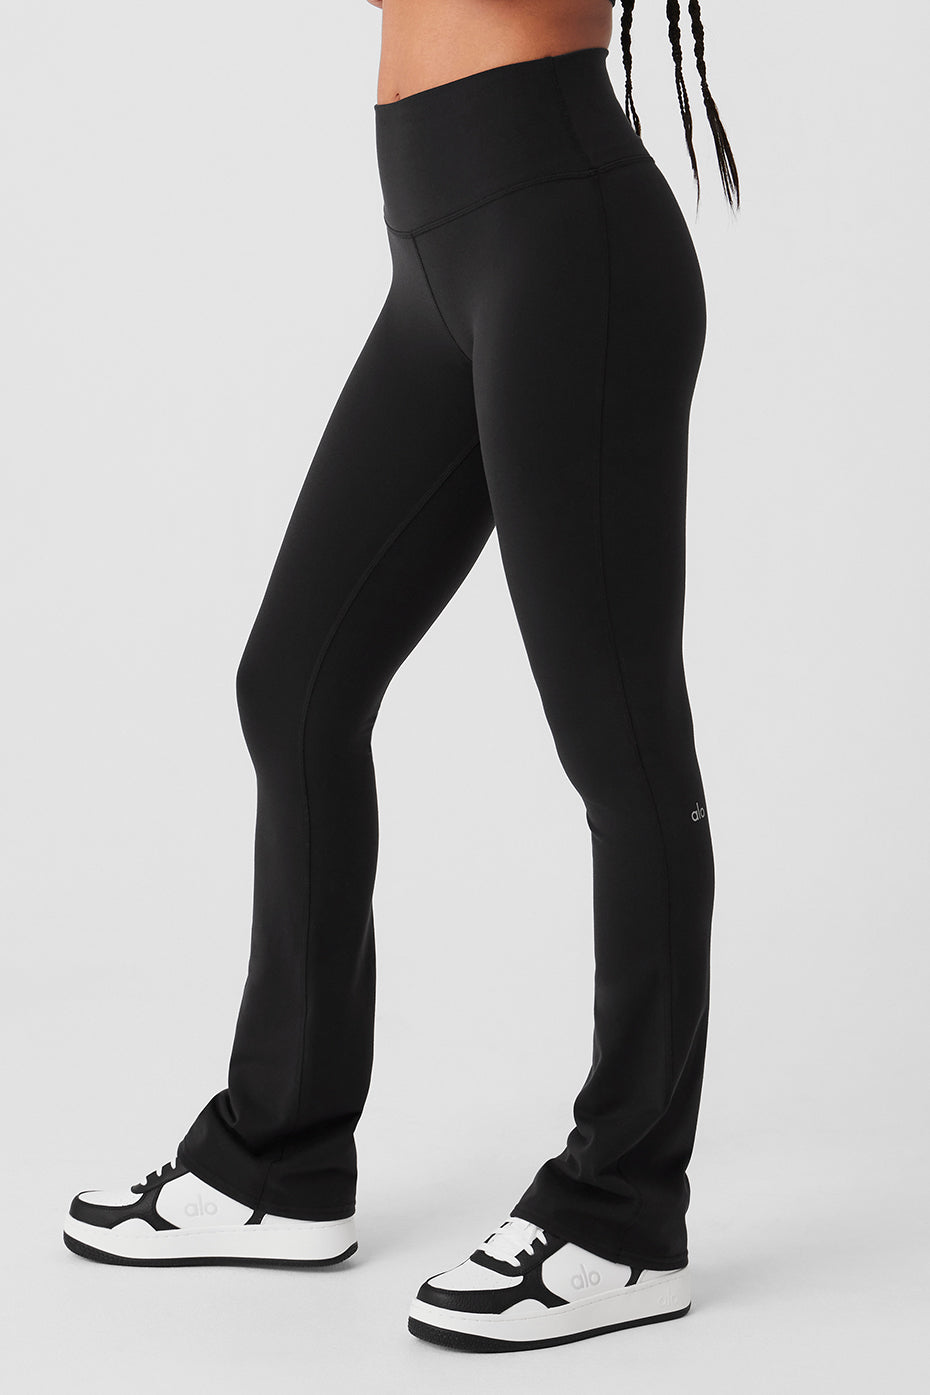 Buy Women's Bootcut Yoga Pants Work Pants Crossover Split Hem Full Length  Flare Leggings with Pocket, Brown, Small at Amazon.in